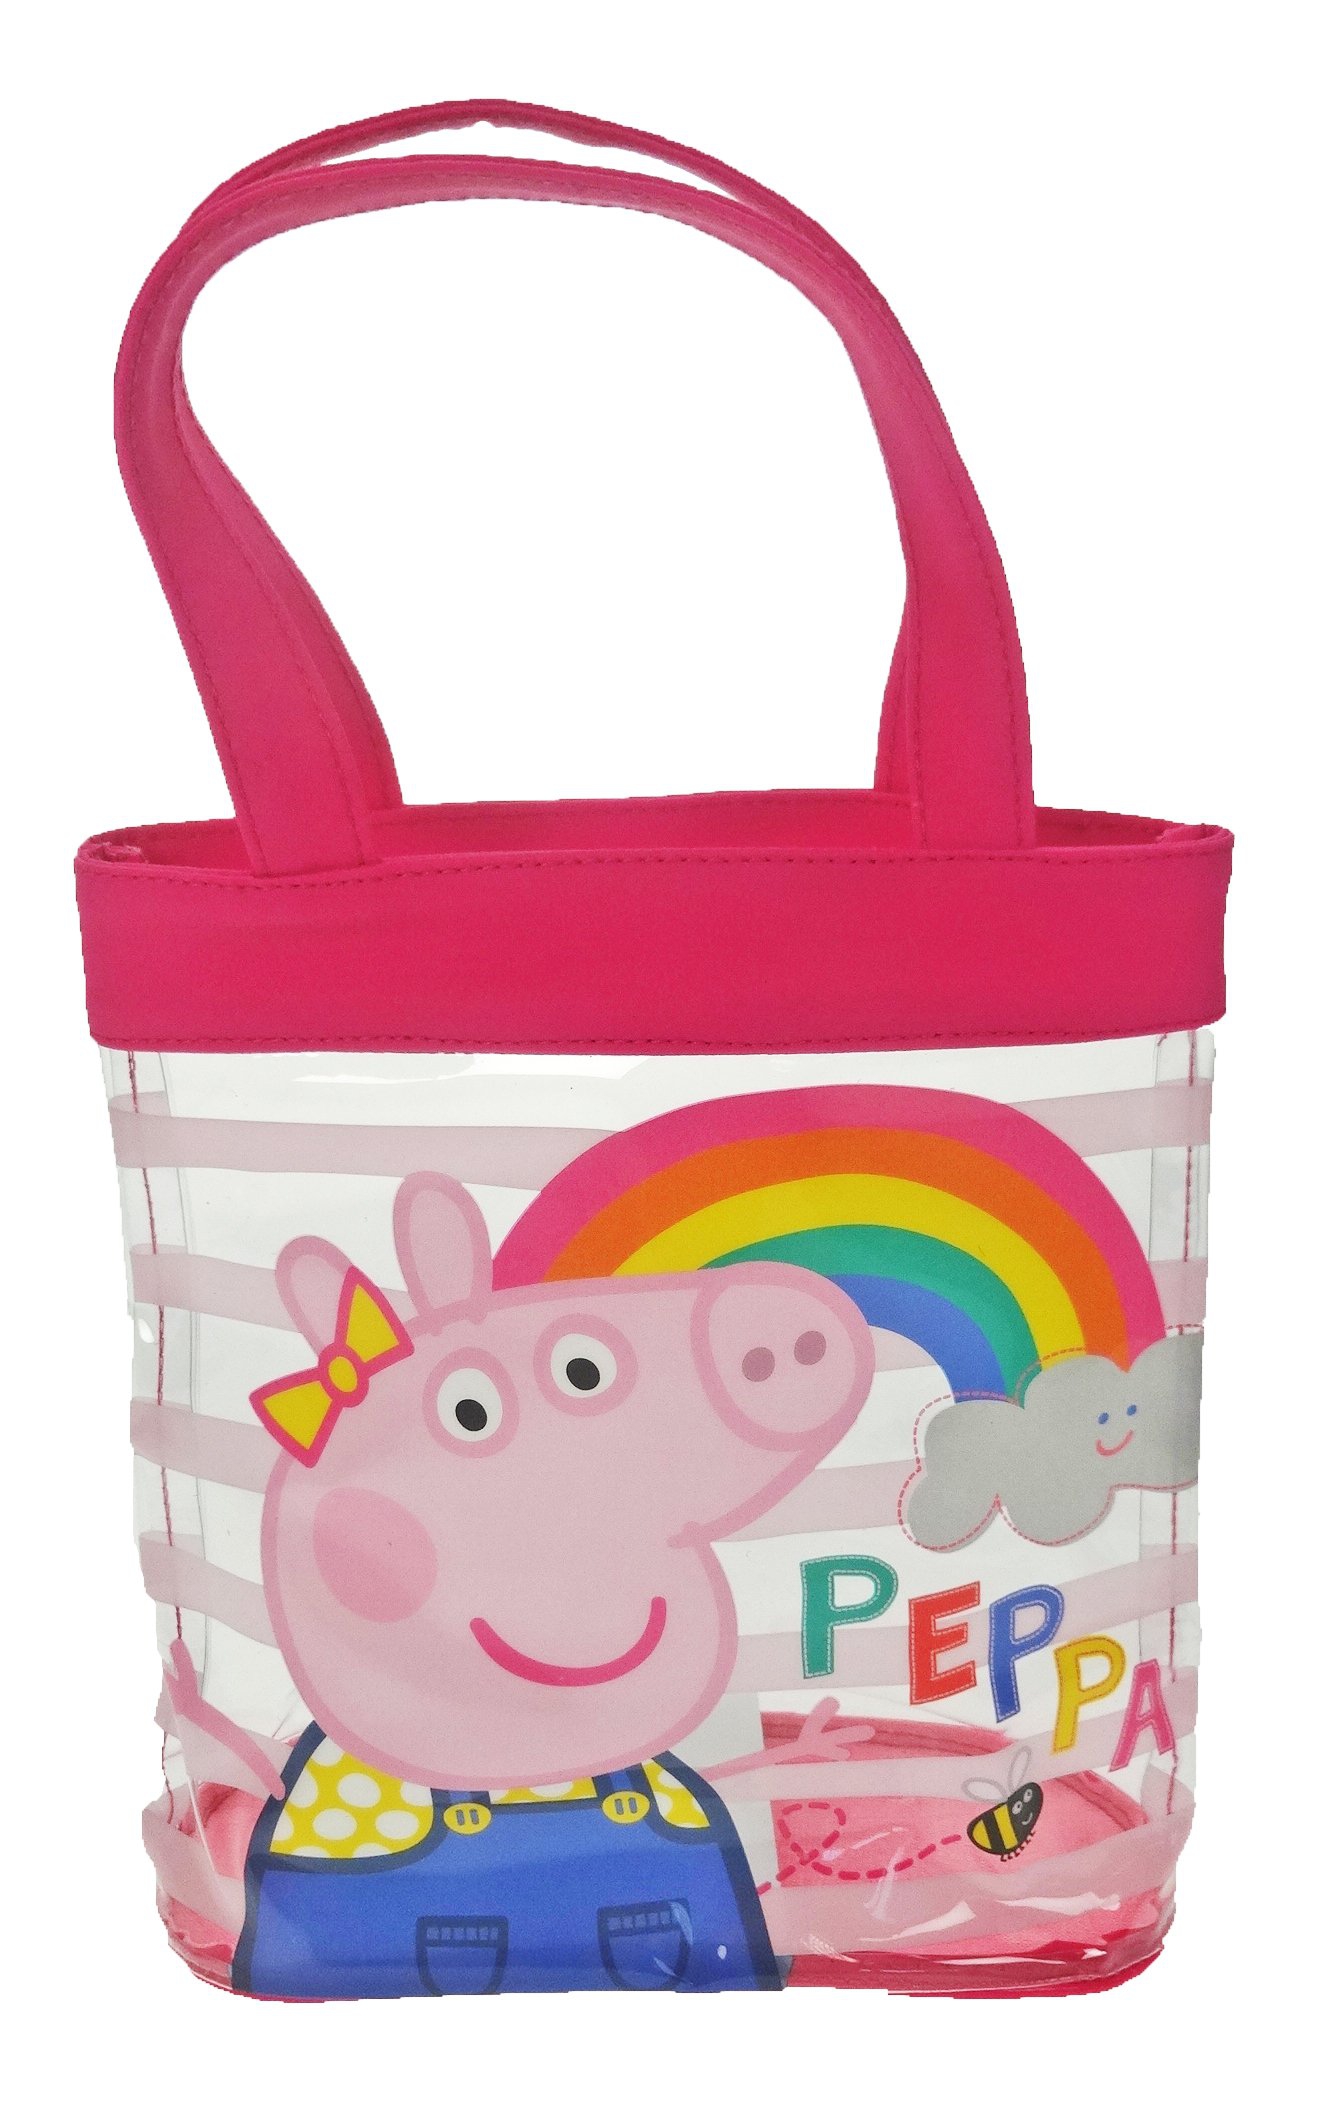 Peppa Pig 'Be Happy' Tote Bag Shopping Shopper